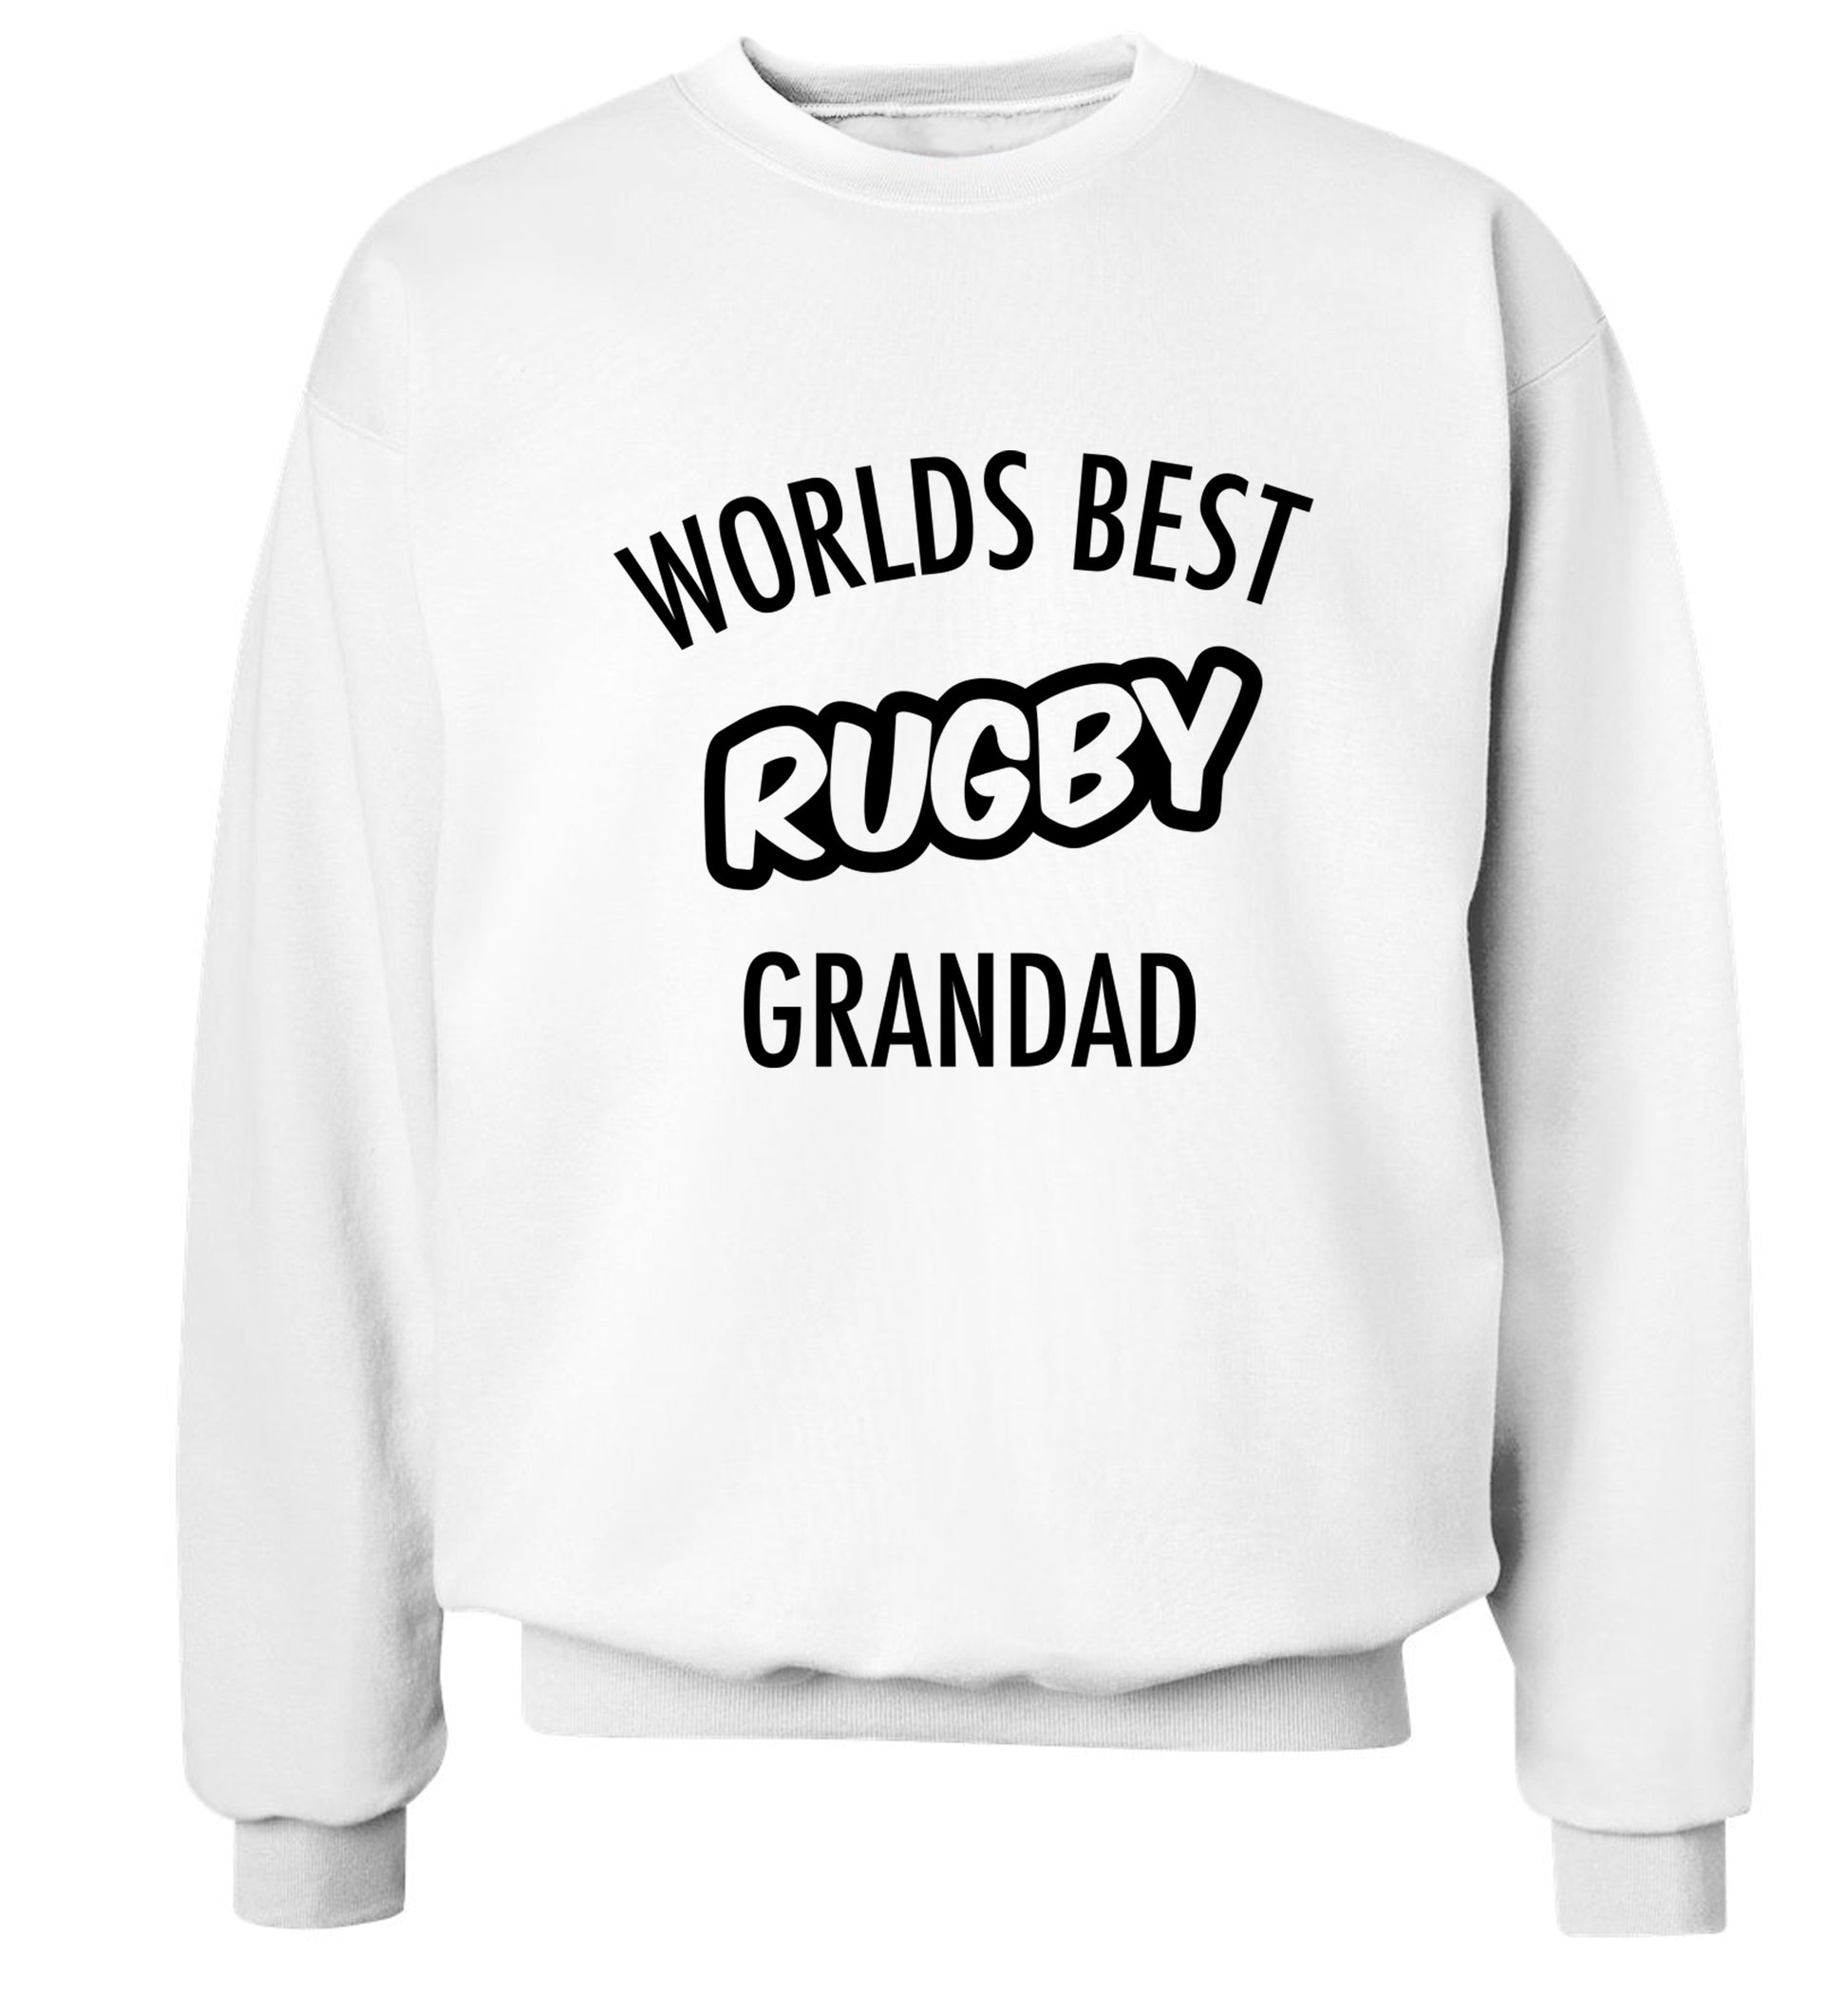 Worlds best rugby grandad Adult's unisex white Sweater 2XL